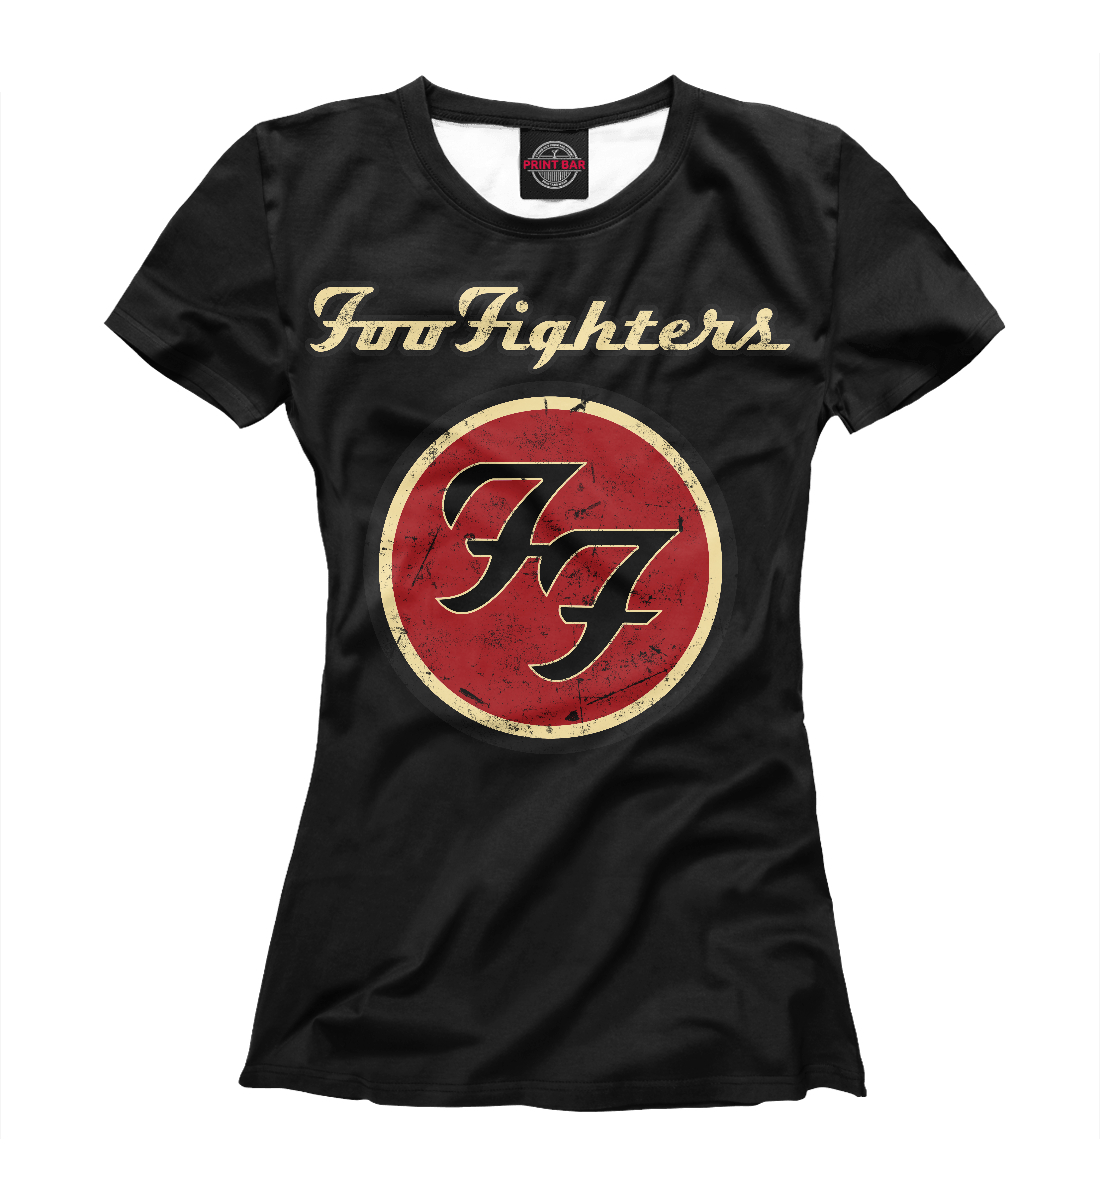 Футболка Foo Fighters MZK-852906-fut-1